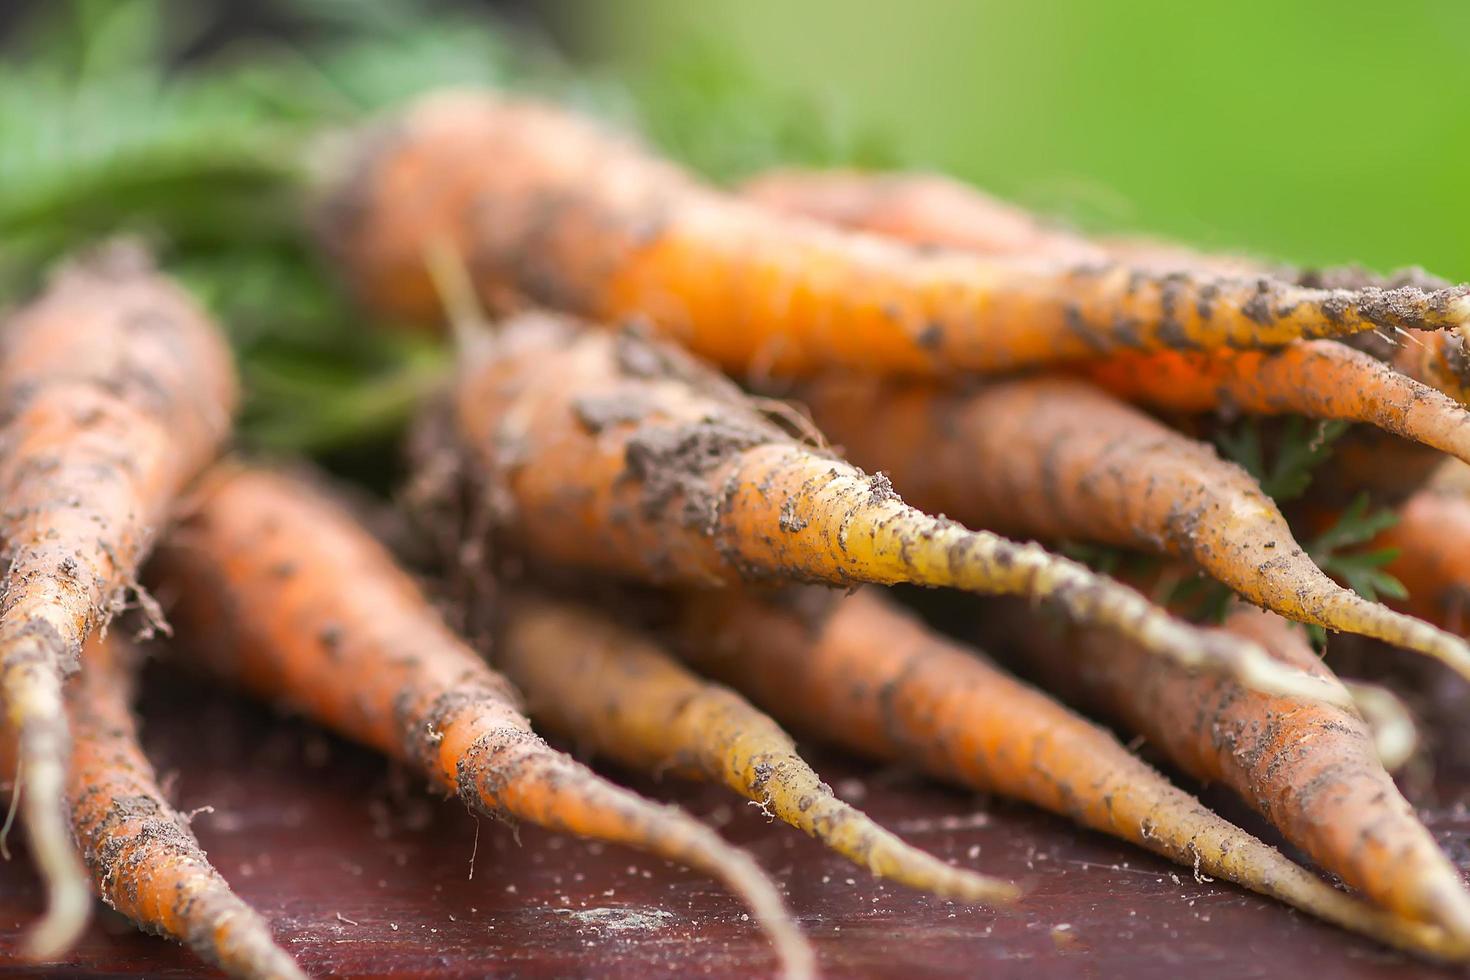 Freshly picked carrots photo